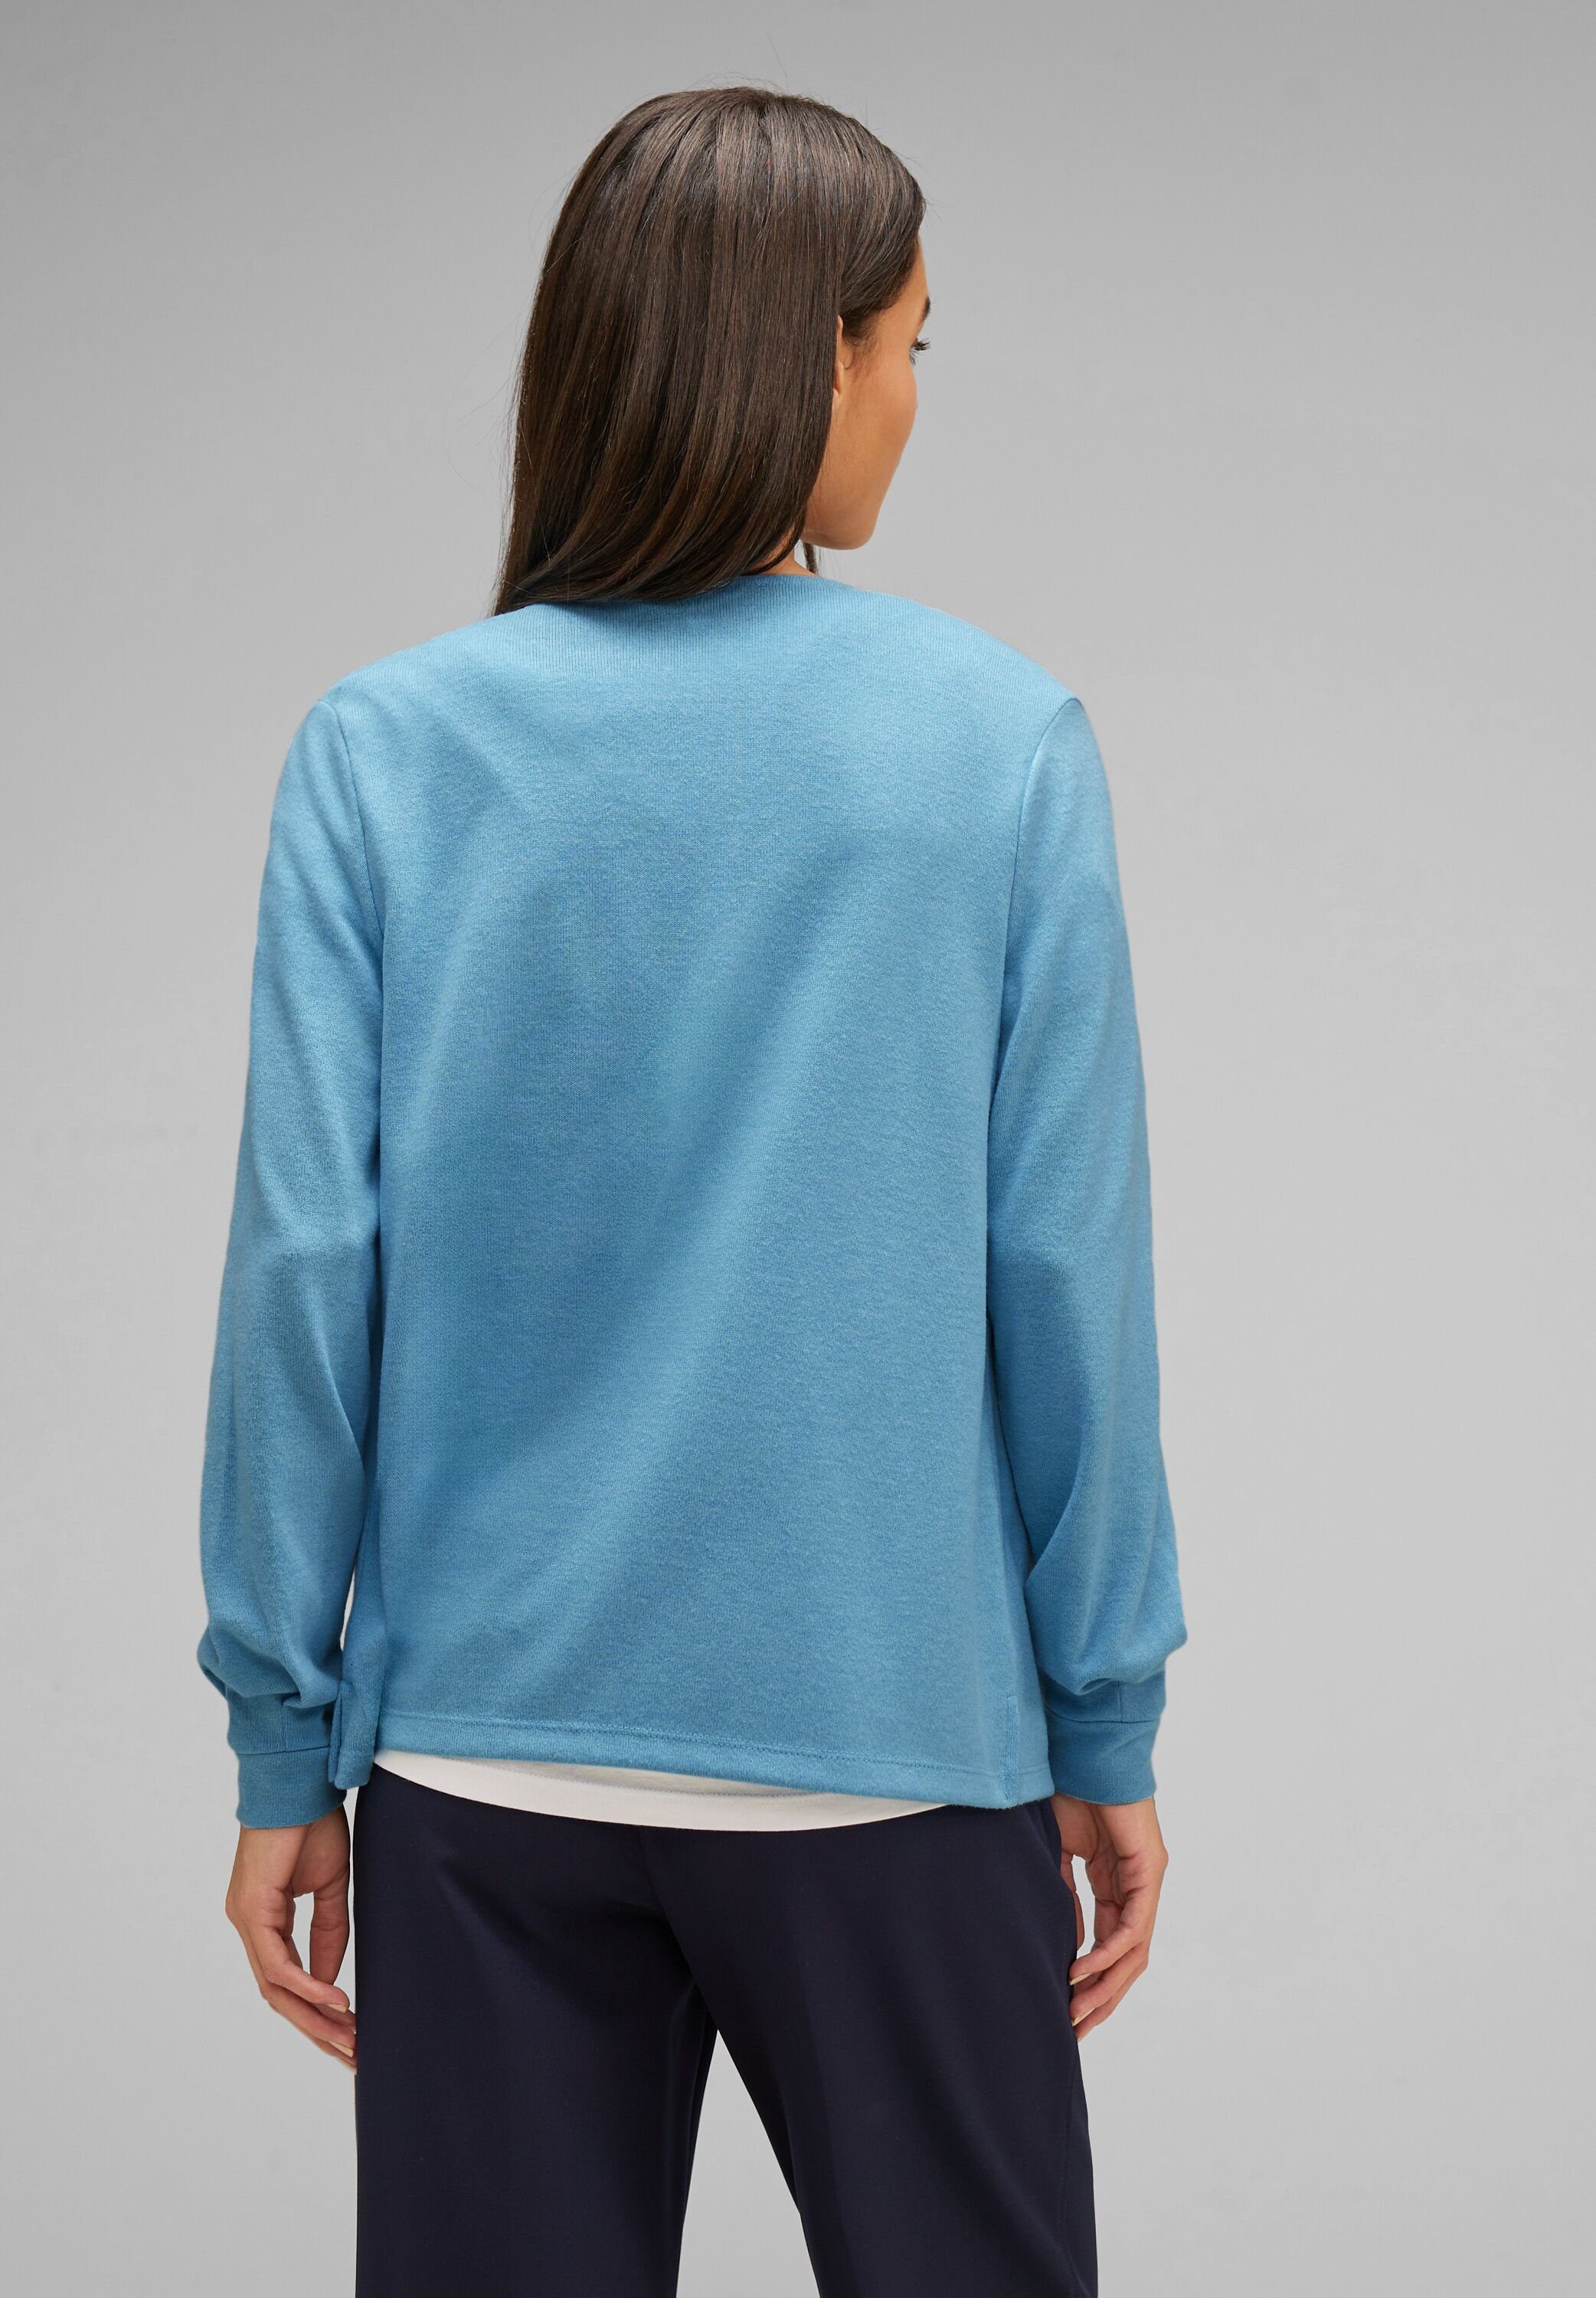 aquamarine LTD Style mel. Shirtjacke Design Shirtjacke Jacy light ONE new STREET QR im blue offenen